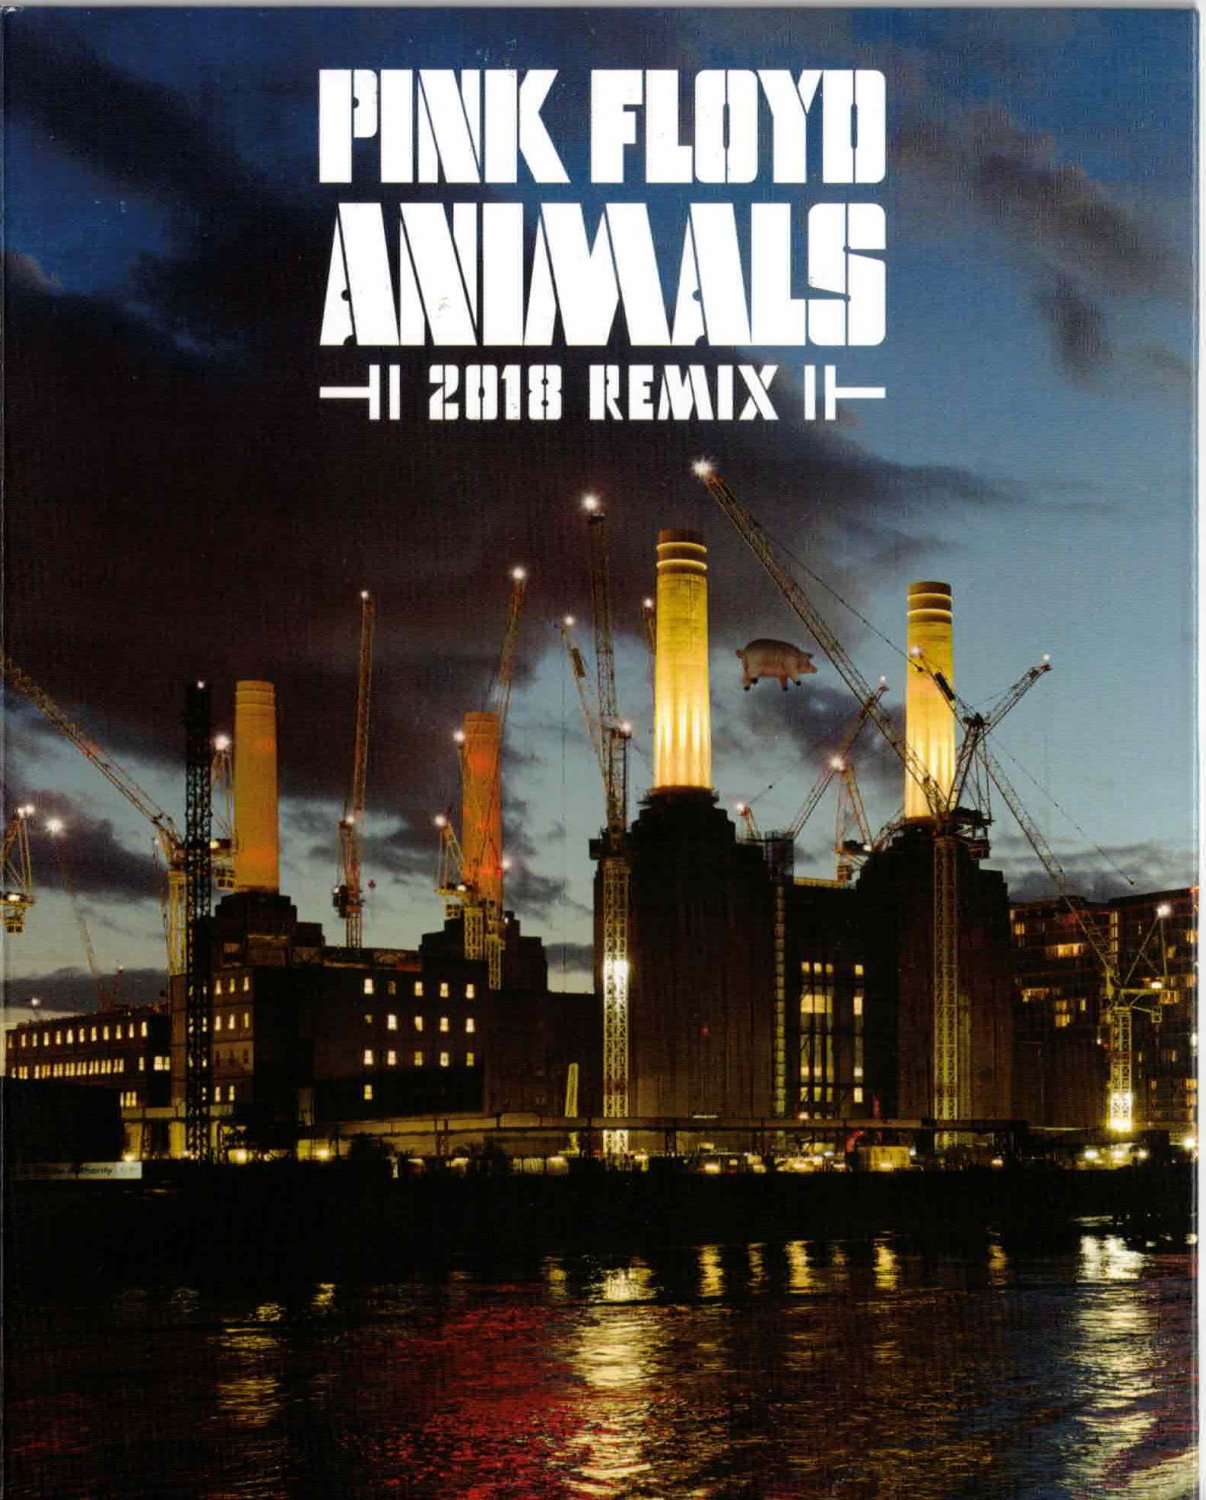 Pink Floyd - Animals 2018 ( BluRay) | Audio Science Review (ASR) Forum